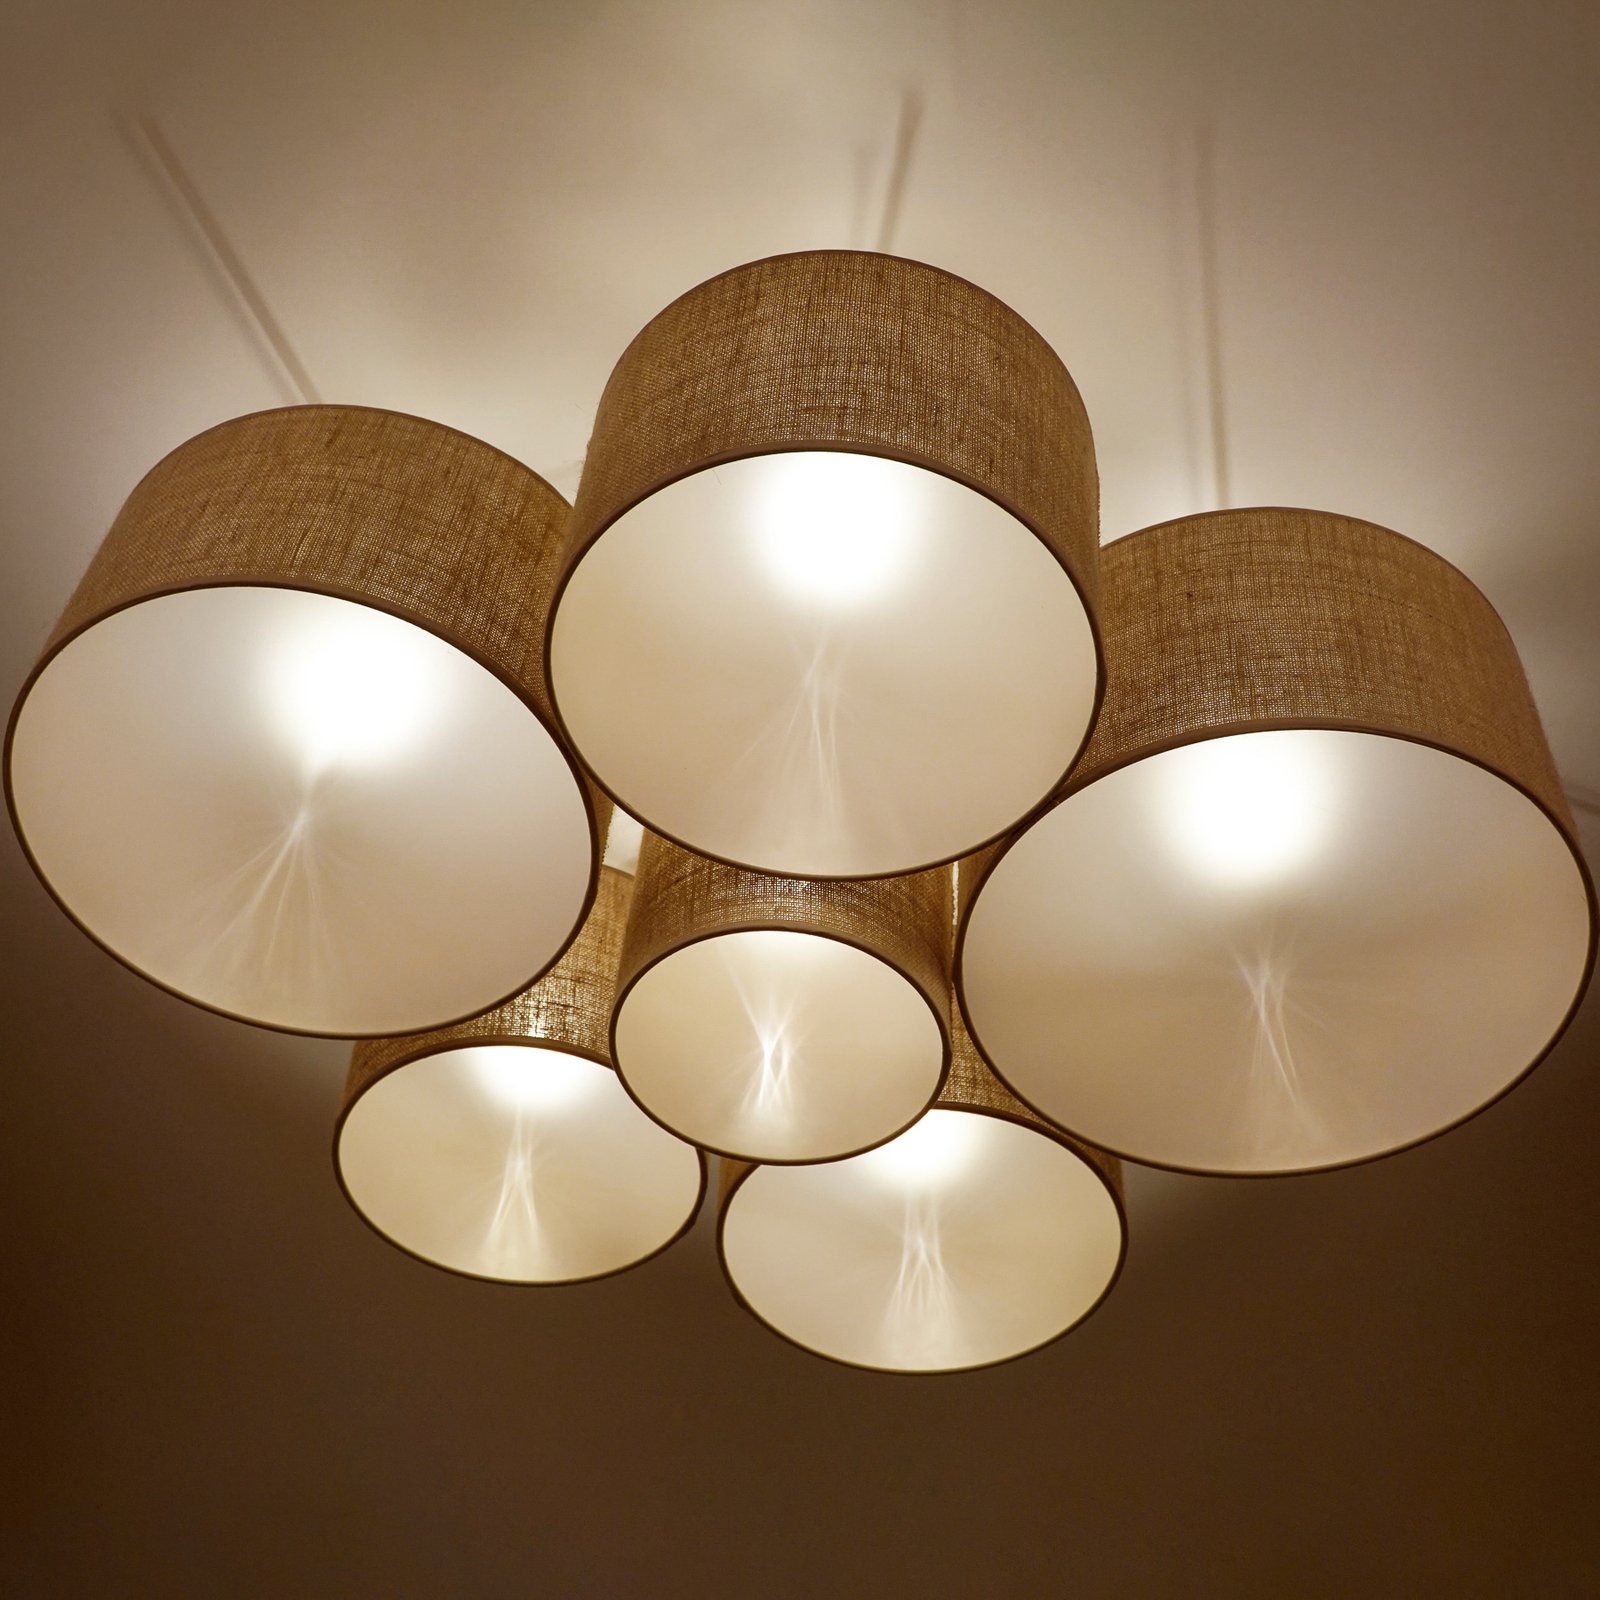 Euluna Lodge ceiling light, 6-bulb, jute